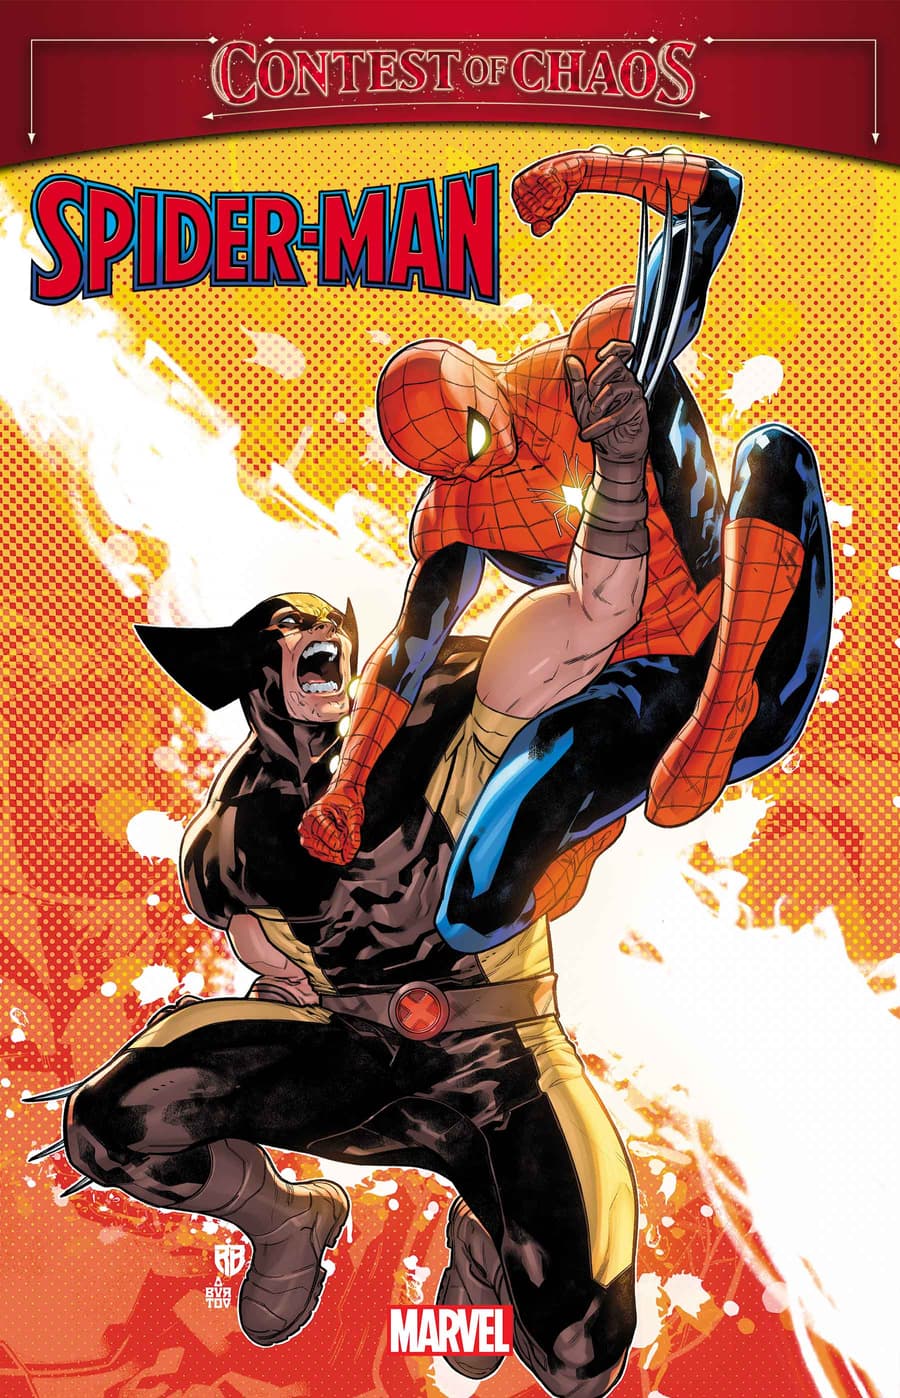 SPIDER-MAN ANNUAL #1 cover by R.B. Silva